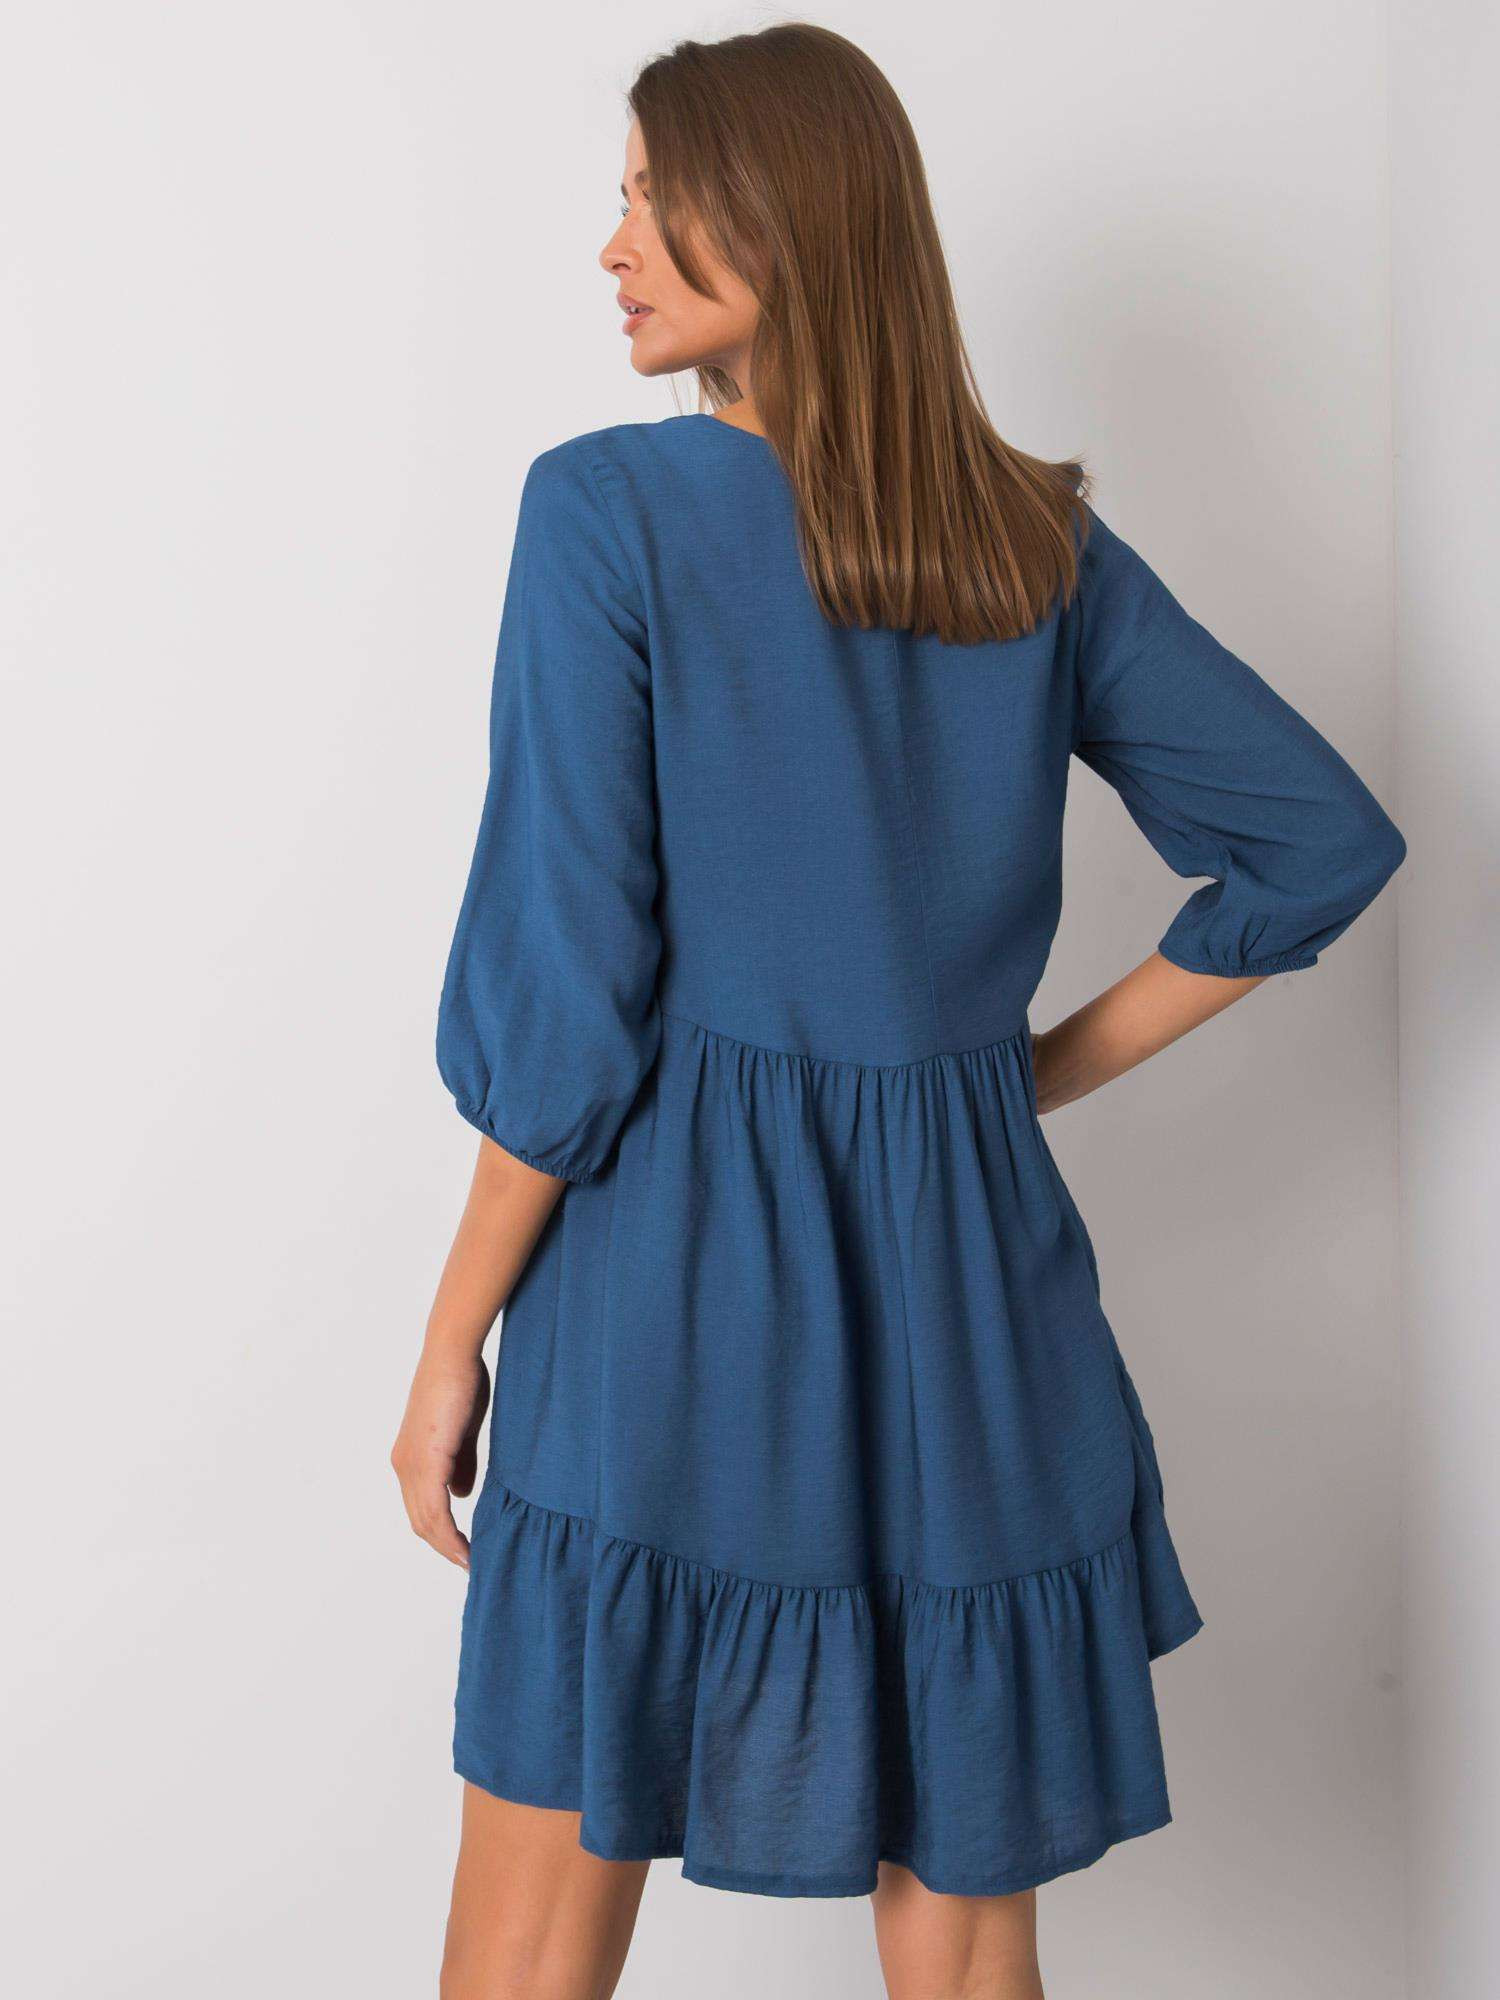 Šaty EM SK model 17550184 tmavě modrá S/M - FPrice